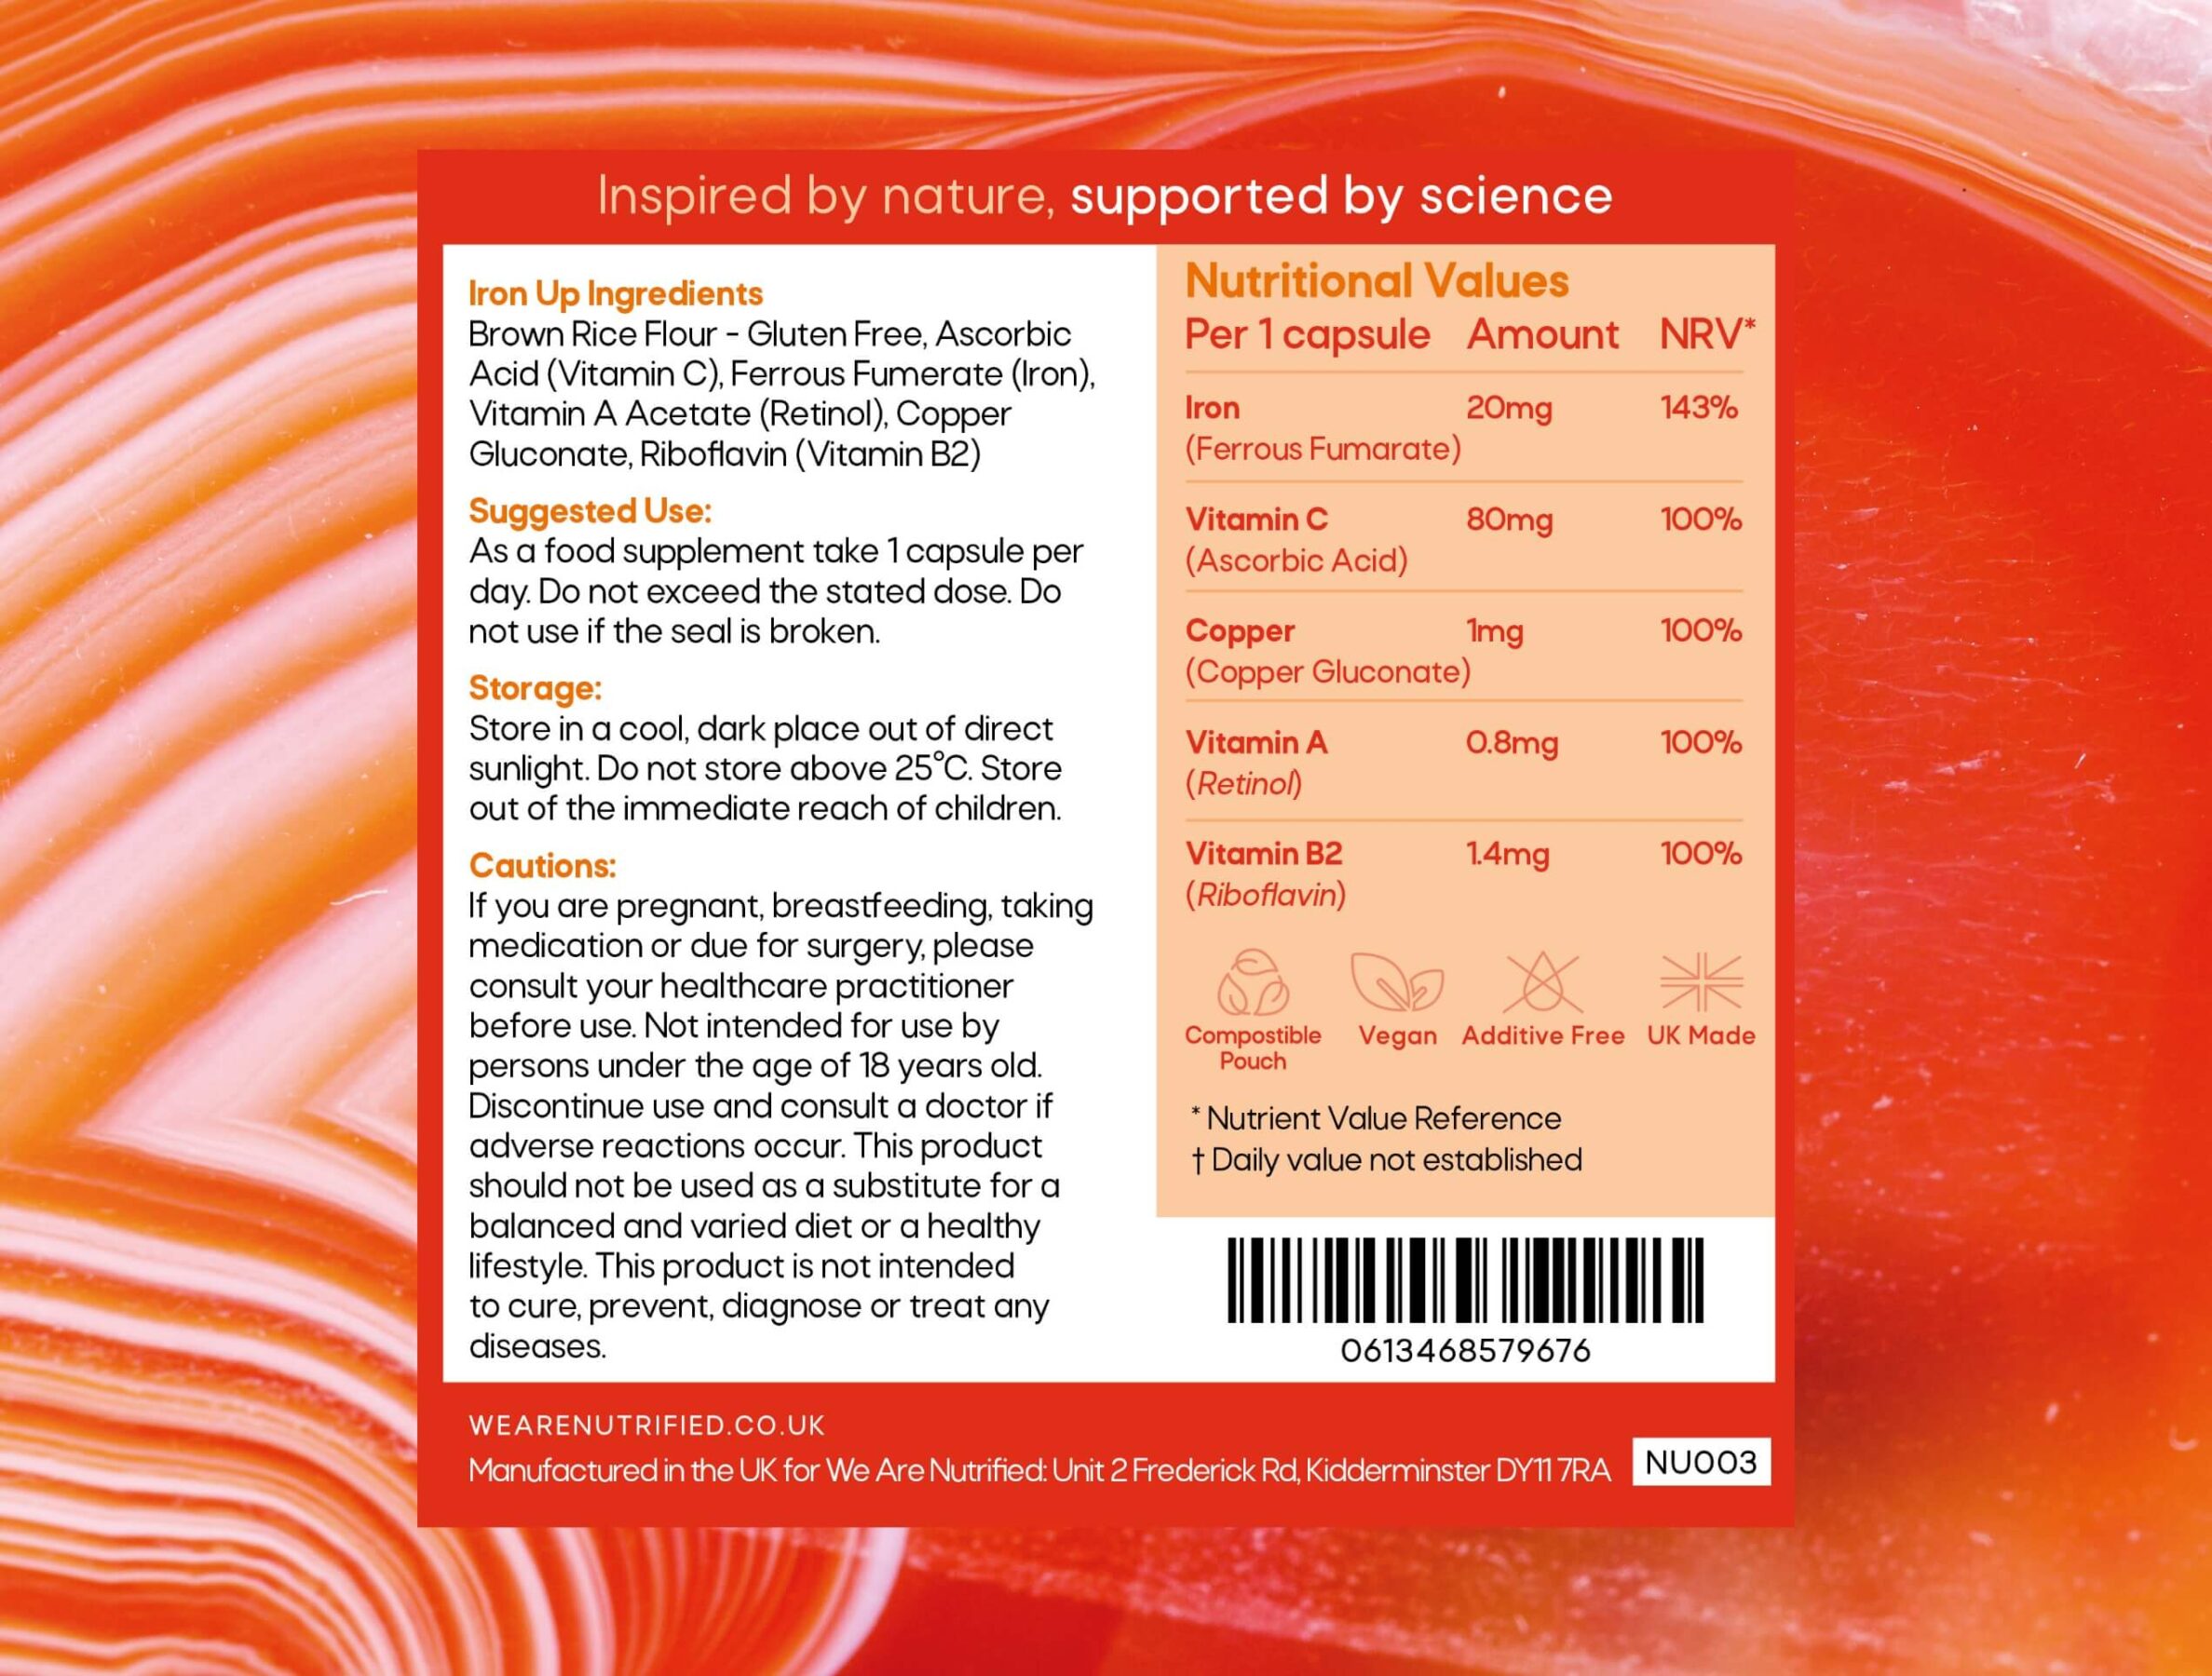 Iron Up iron supplement nutritional information label on orange background